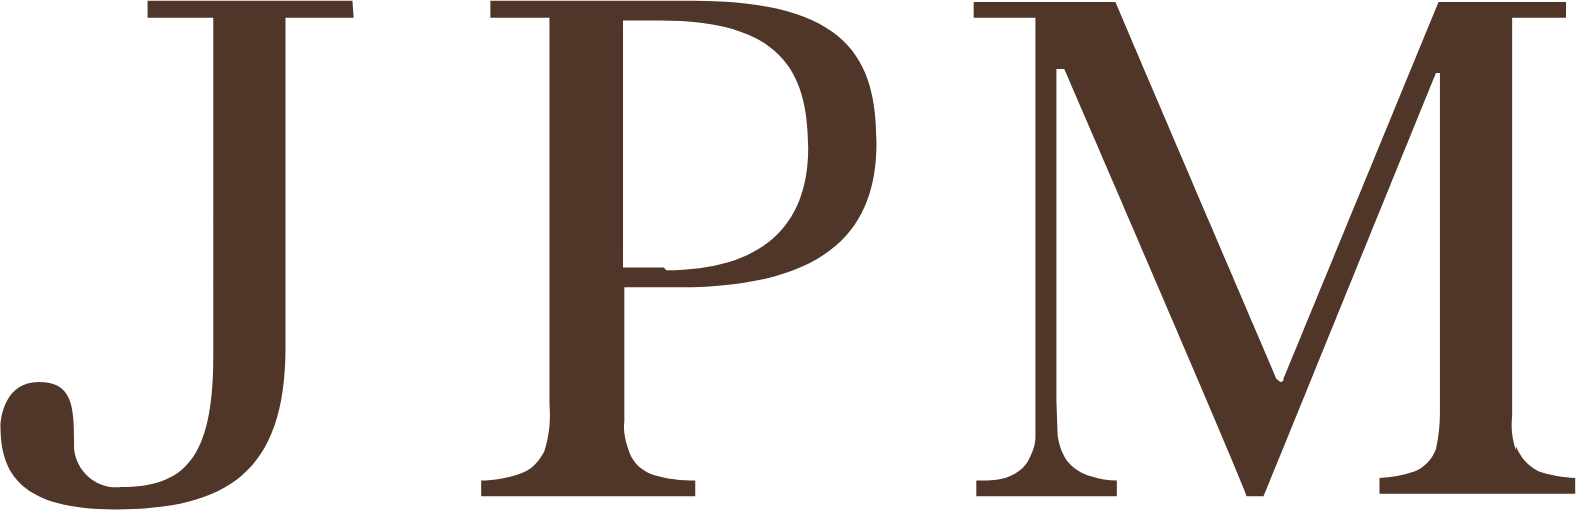 JPMorgan Chase logo (PNG transparent)